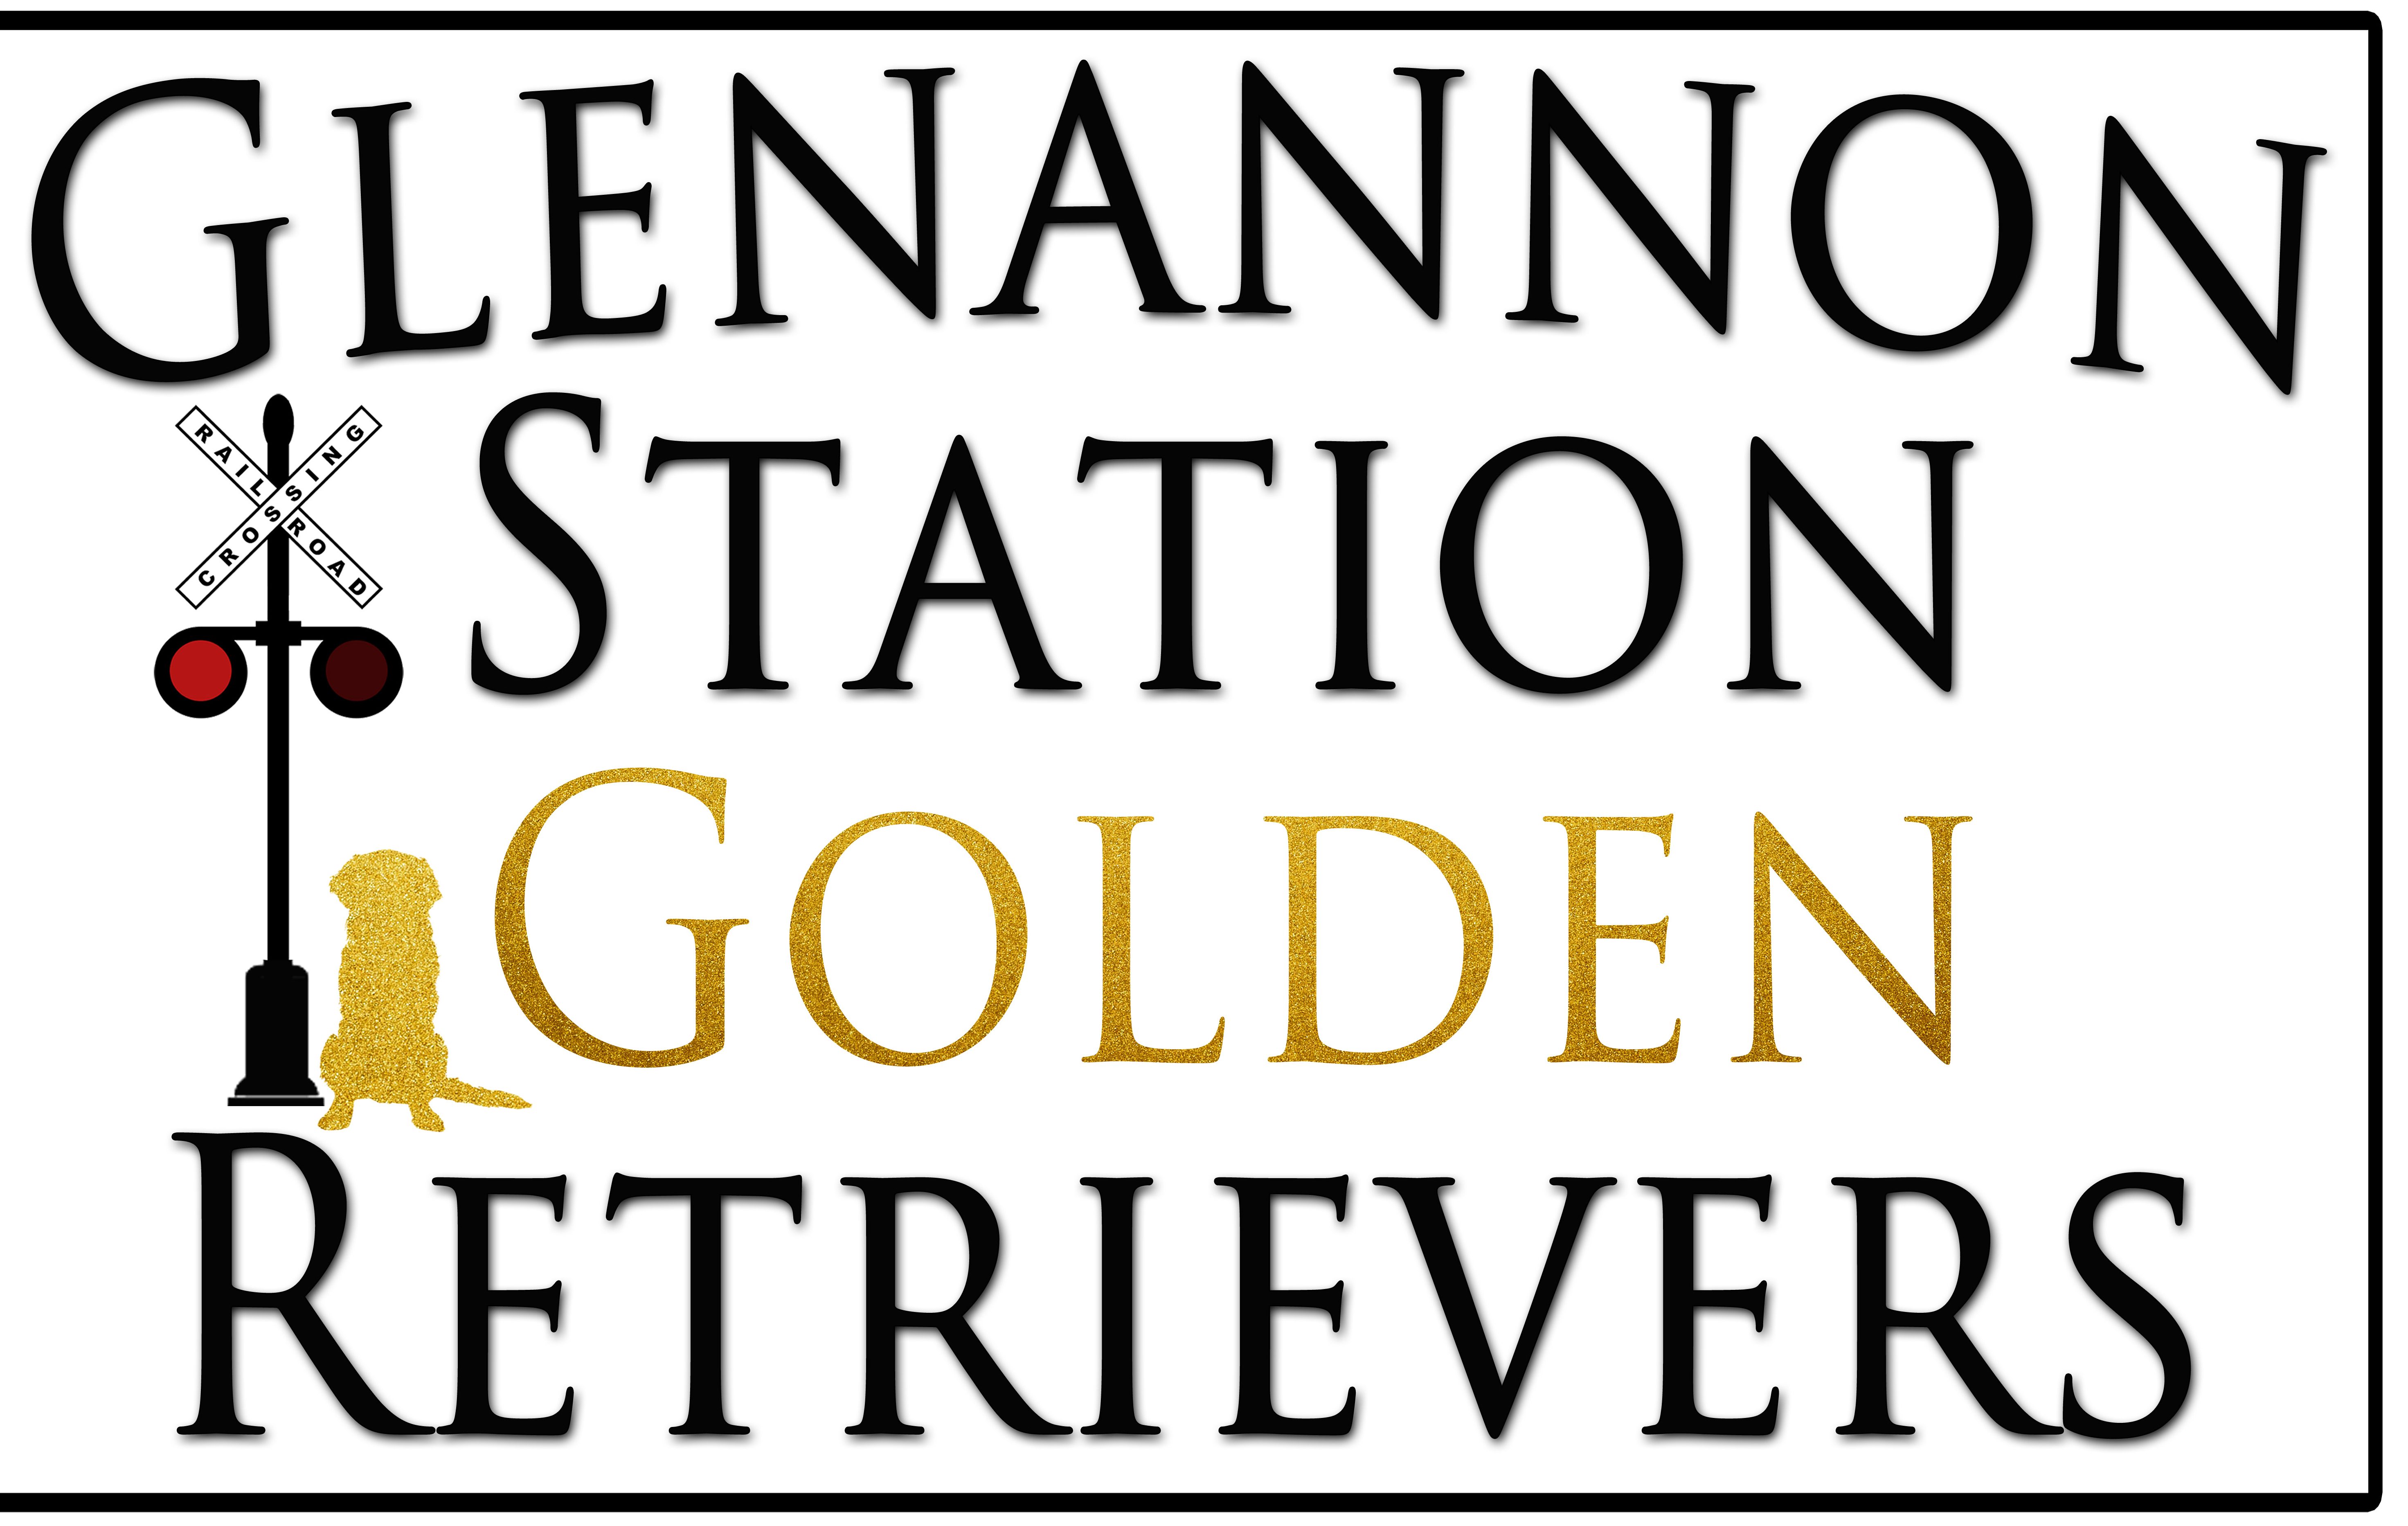 Glenannon Station Golden Retrievers